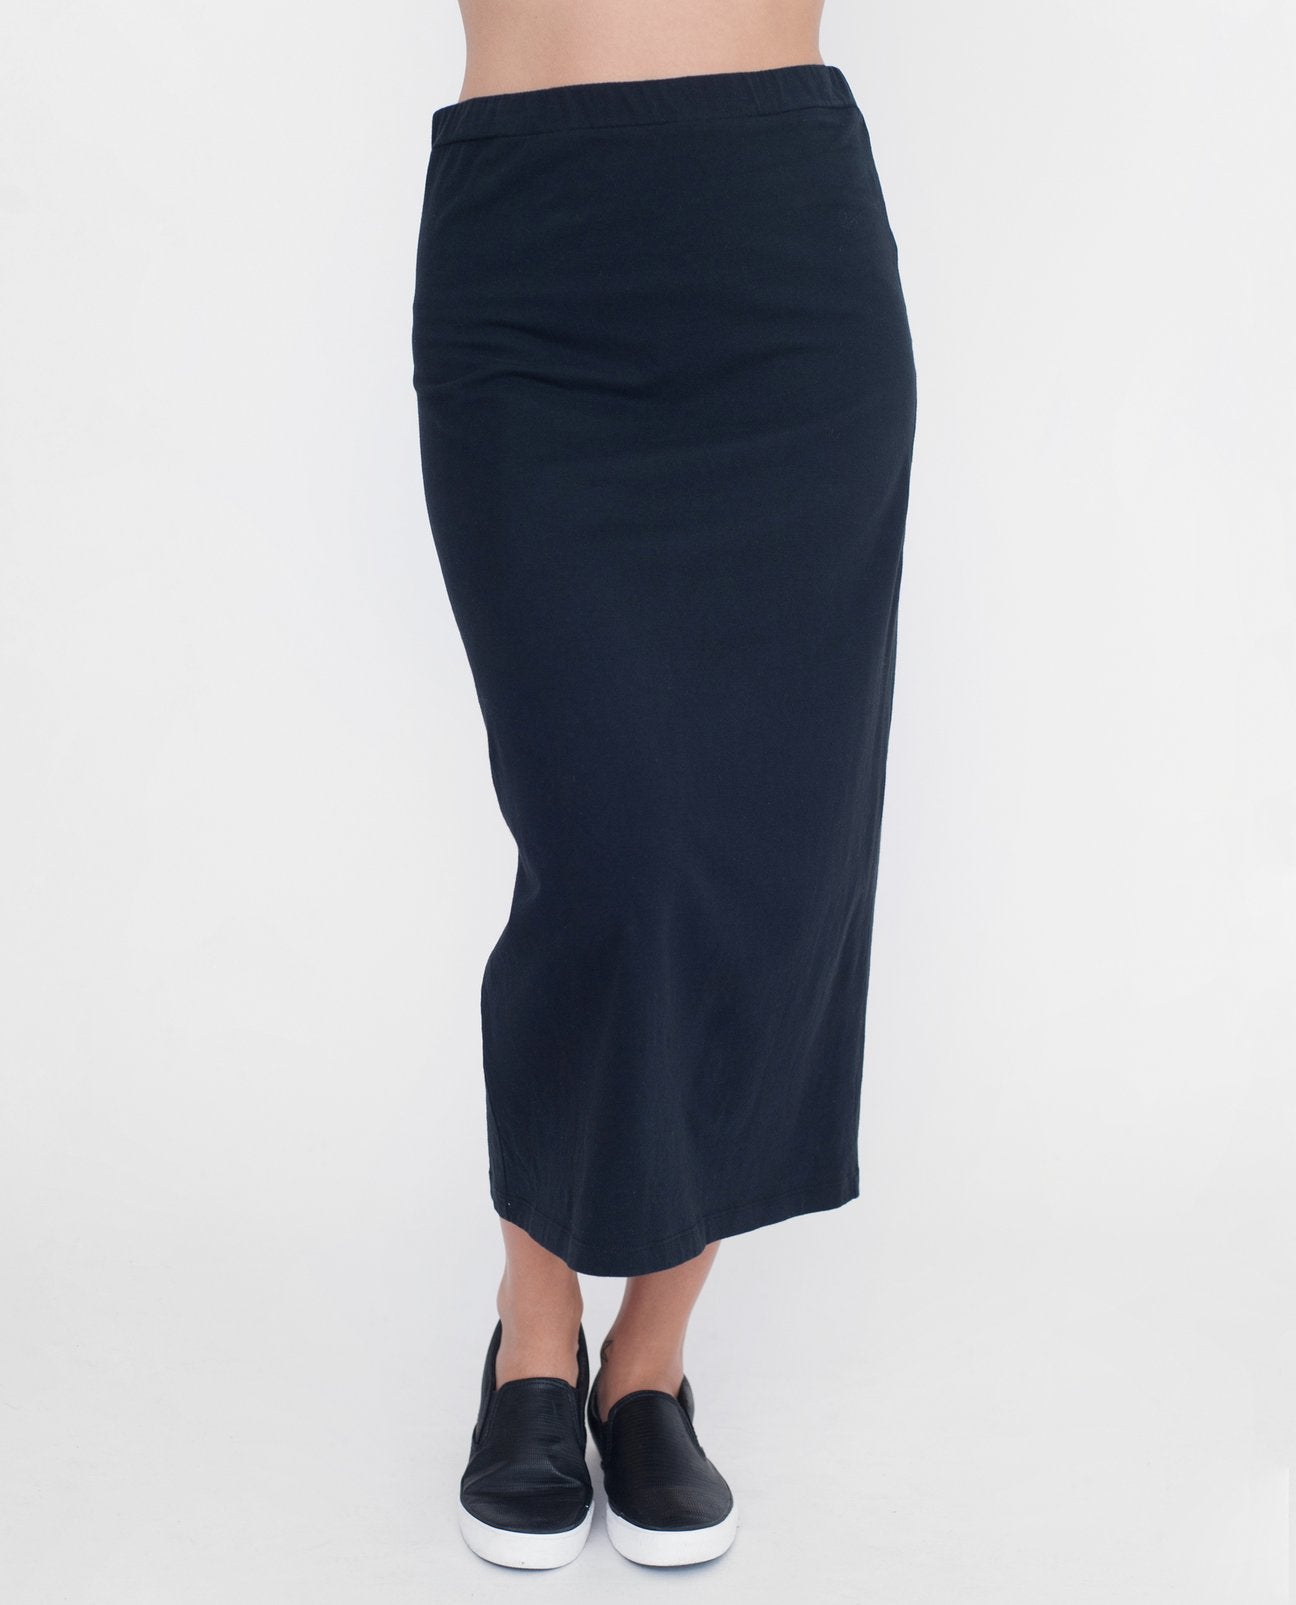 Pam Organic Cotton Skirt - black